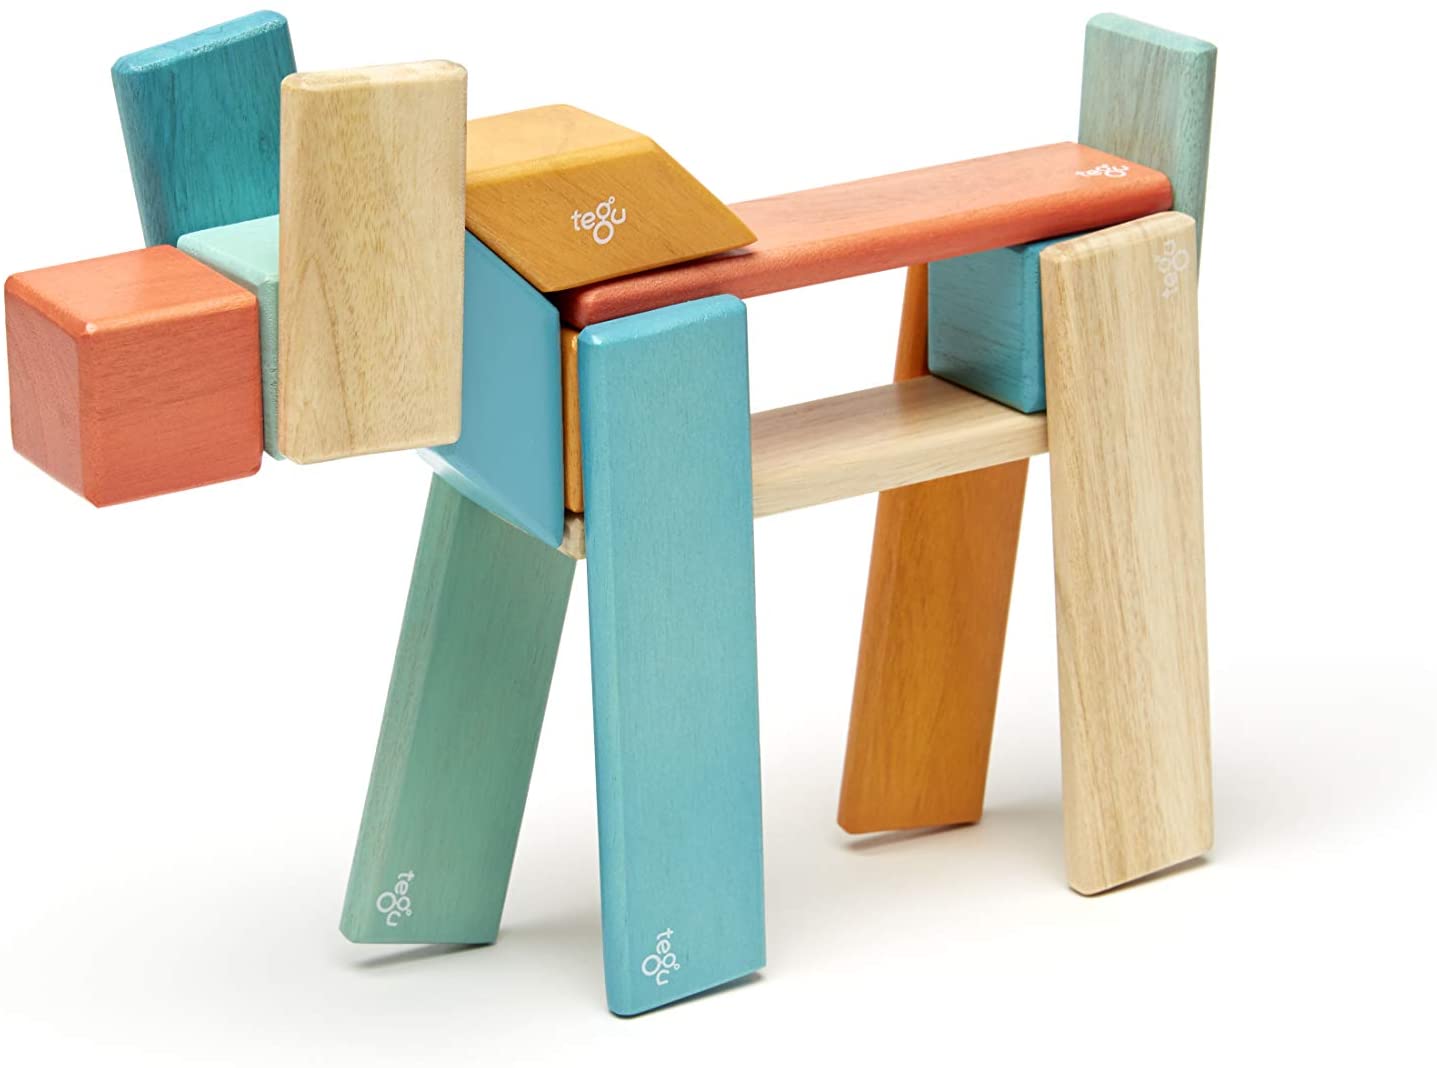 24-Piece Set Magnetic Wooden Blocks Tegu Classics at Tegu Toys